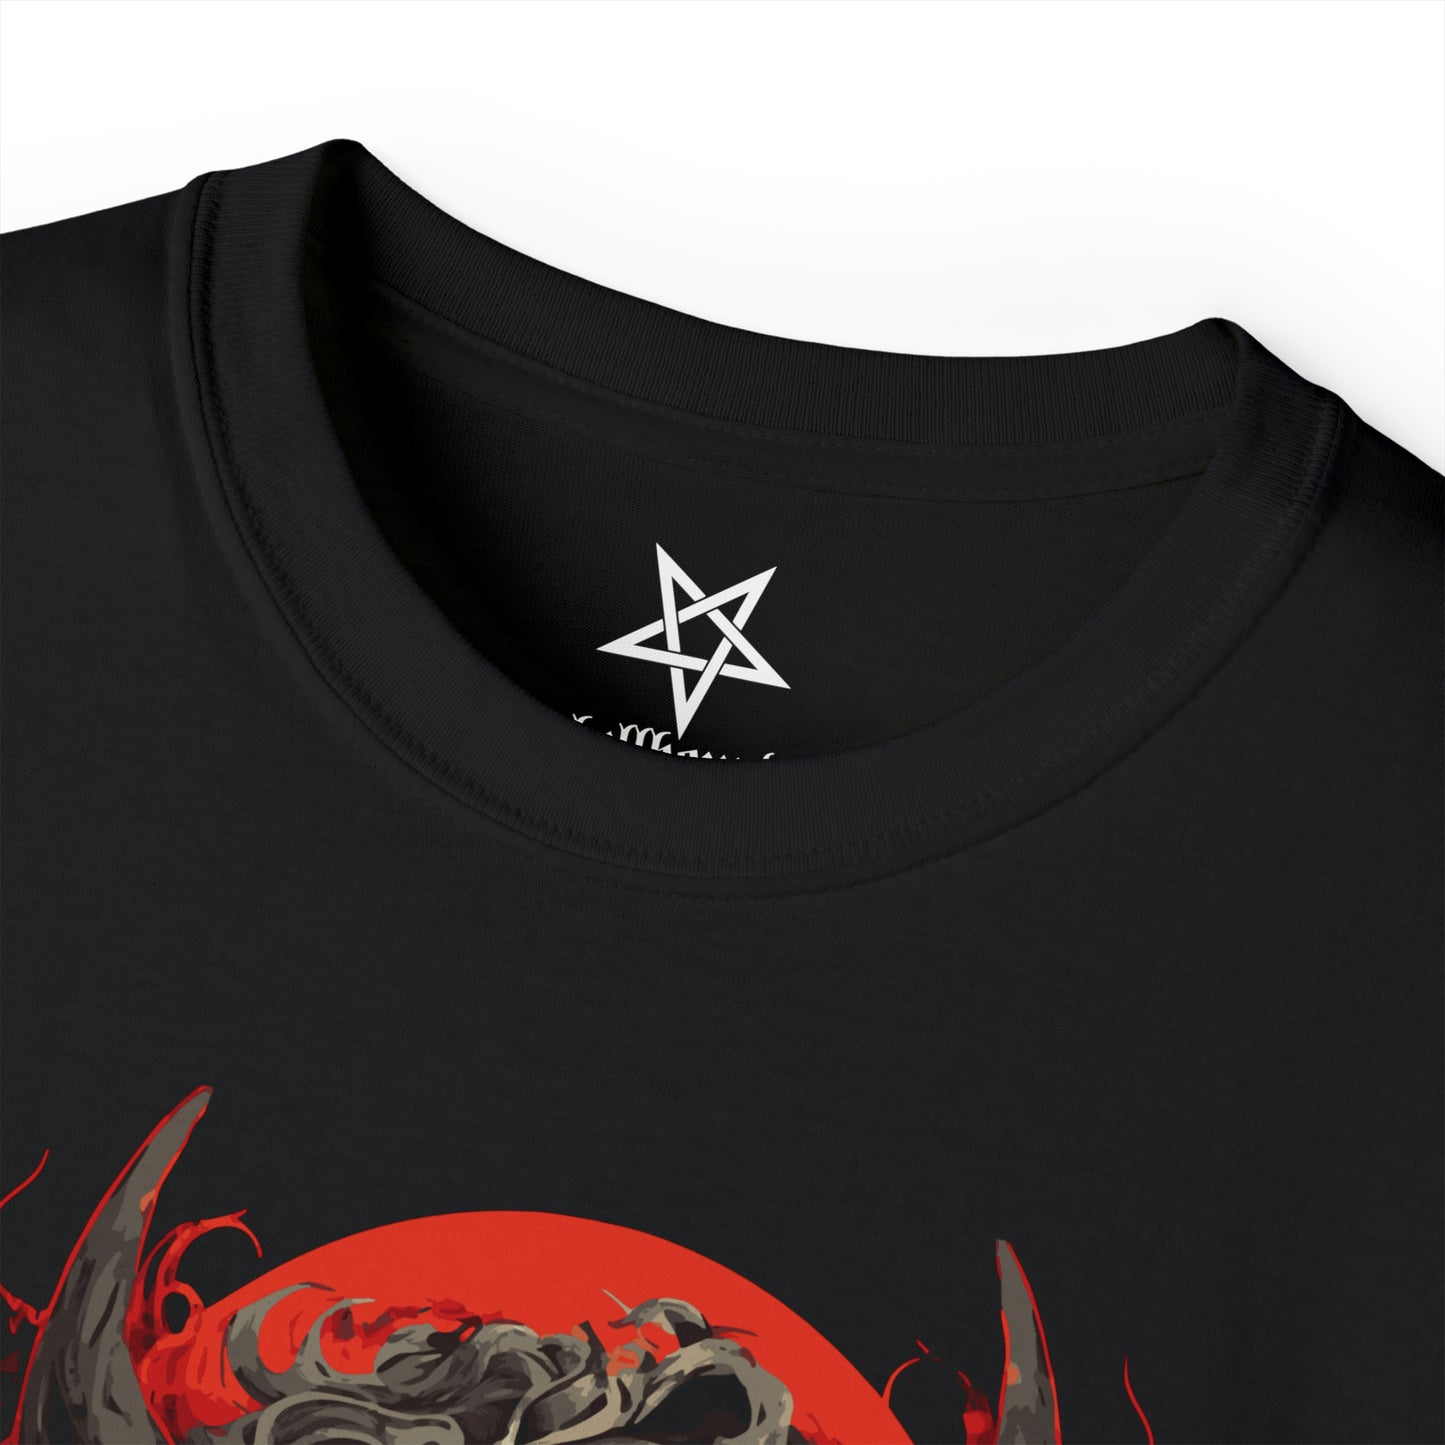 Succuba Seductress T-shirt by Hellhound Clothing